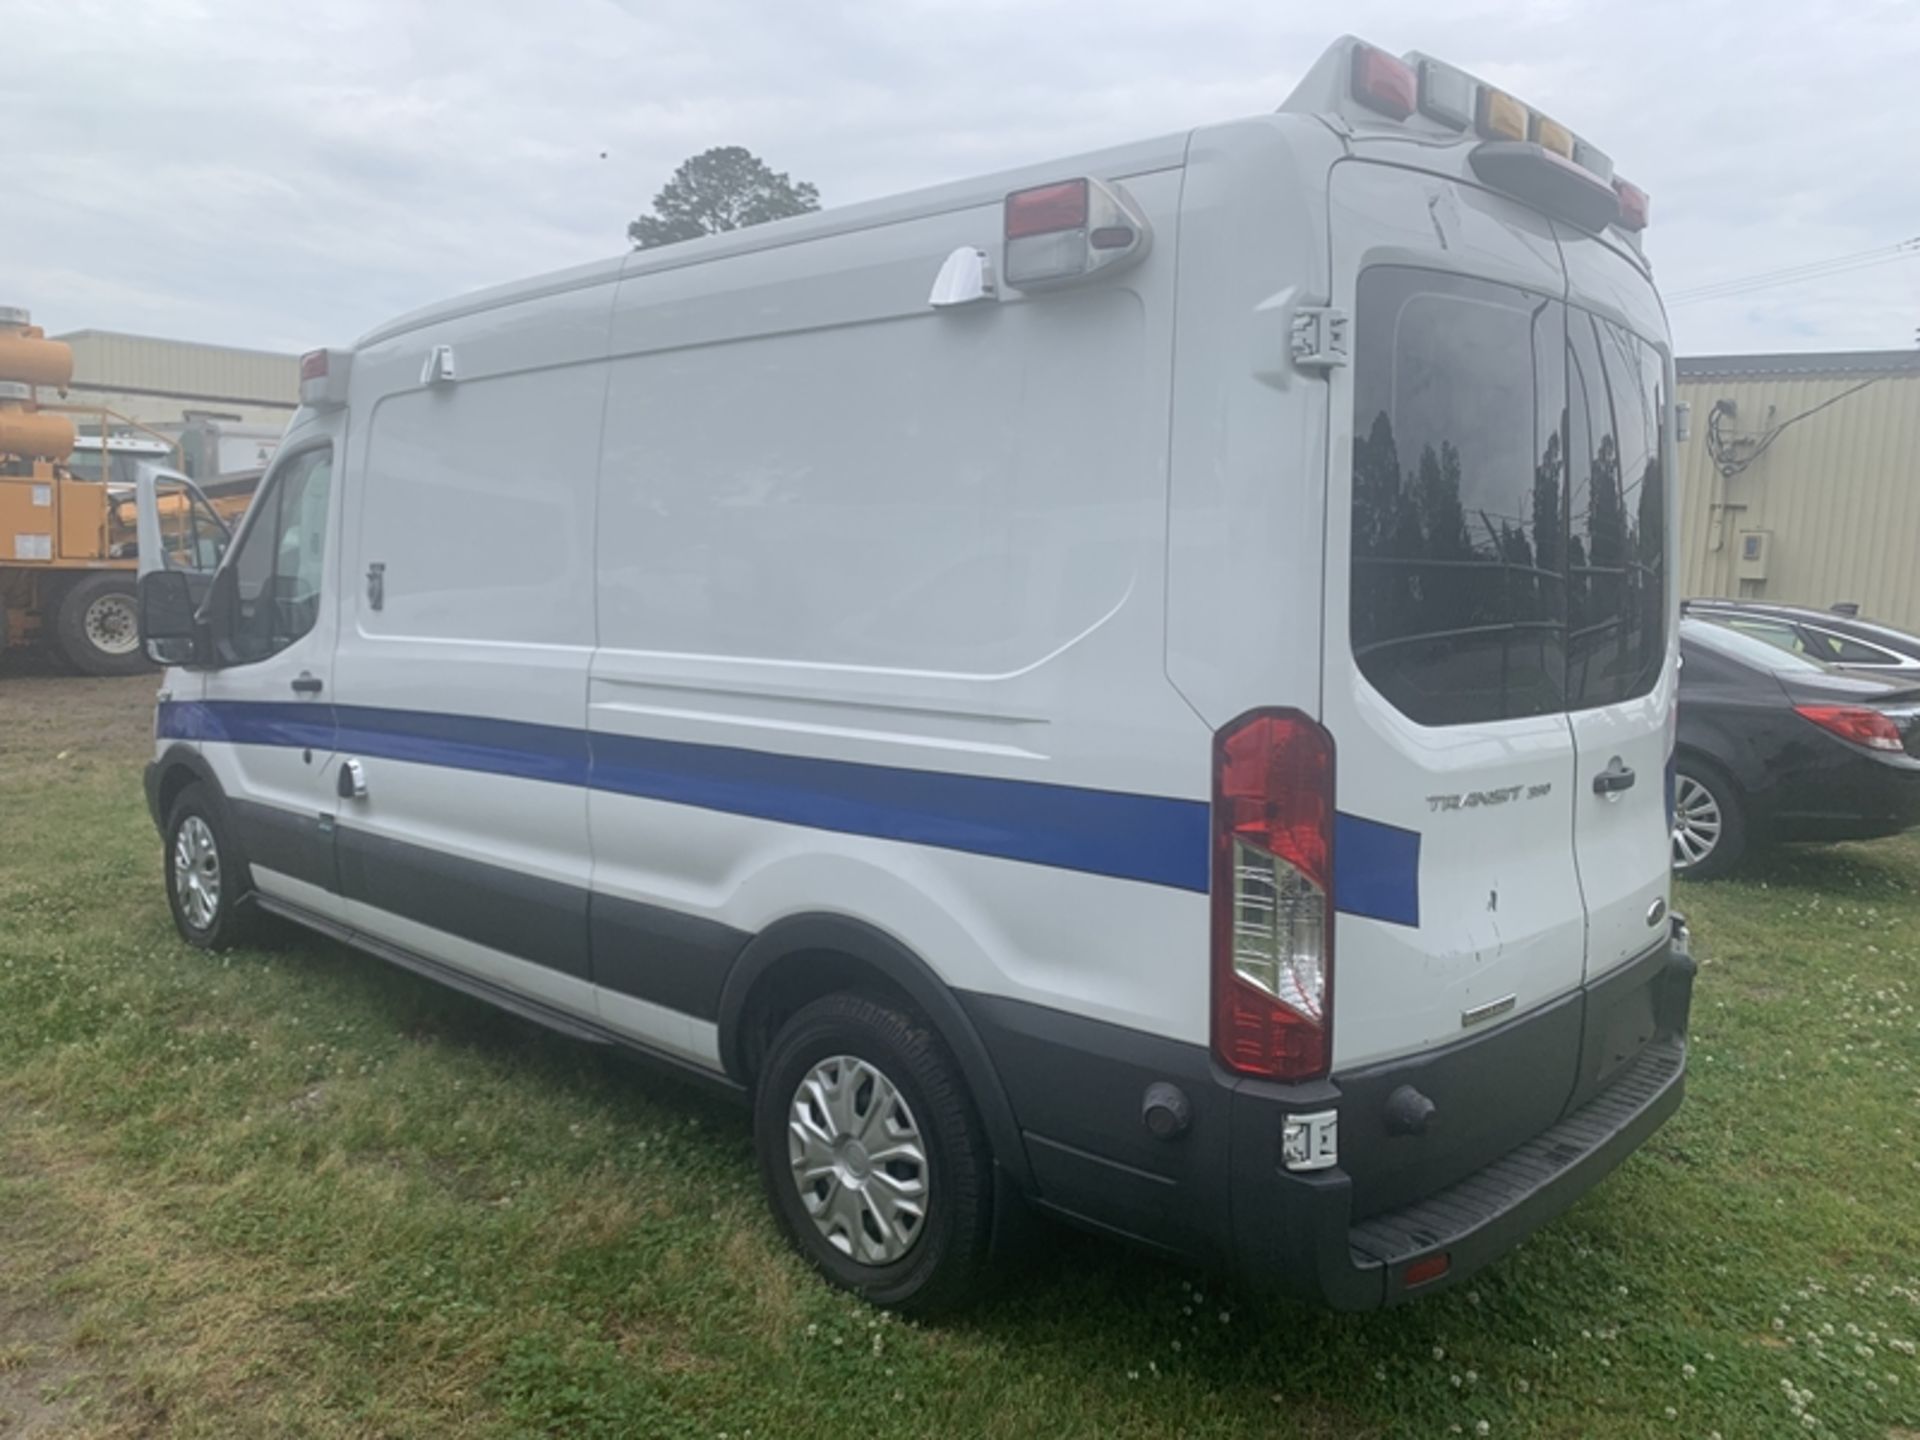 2018 FORD Transit 350 Sprinter Van, Type II Ambulance, 3.2L dsl - 162,758 miles - VIN: - Image 4 of 6